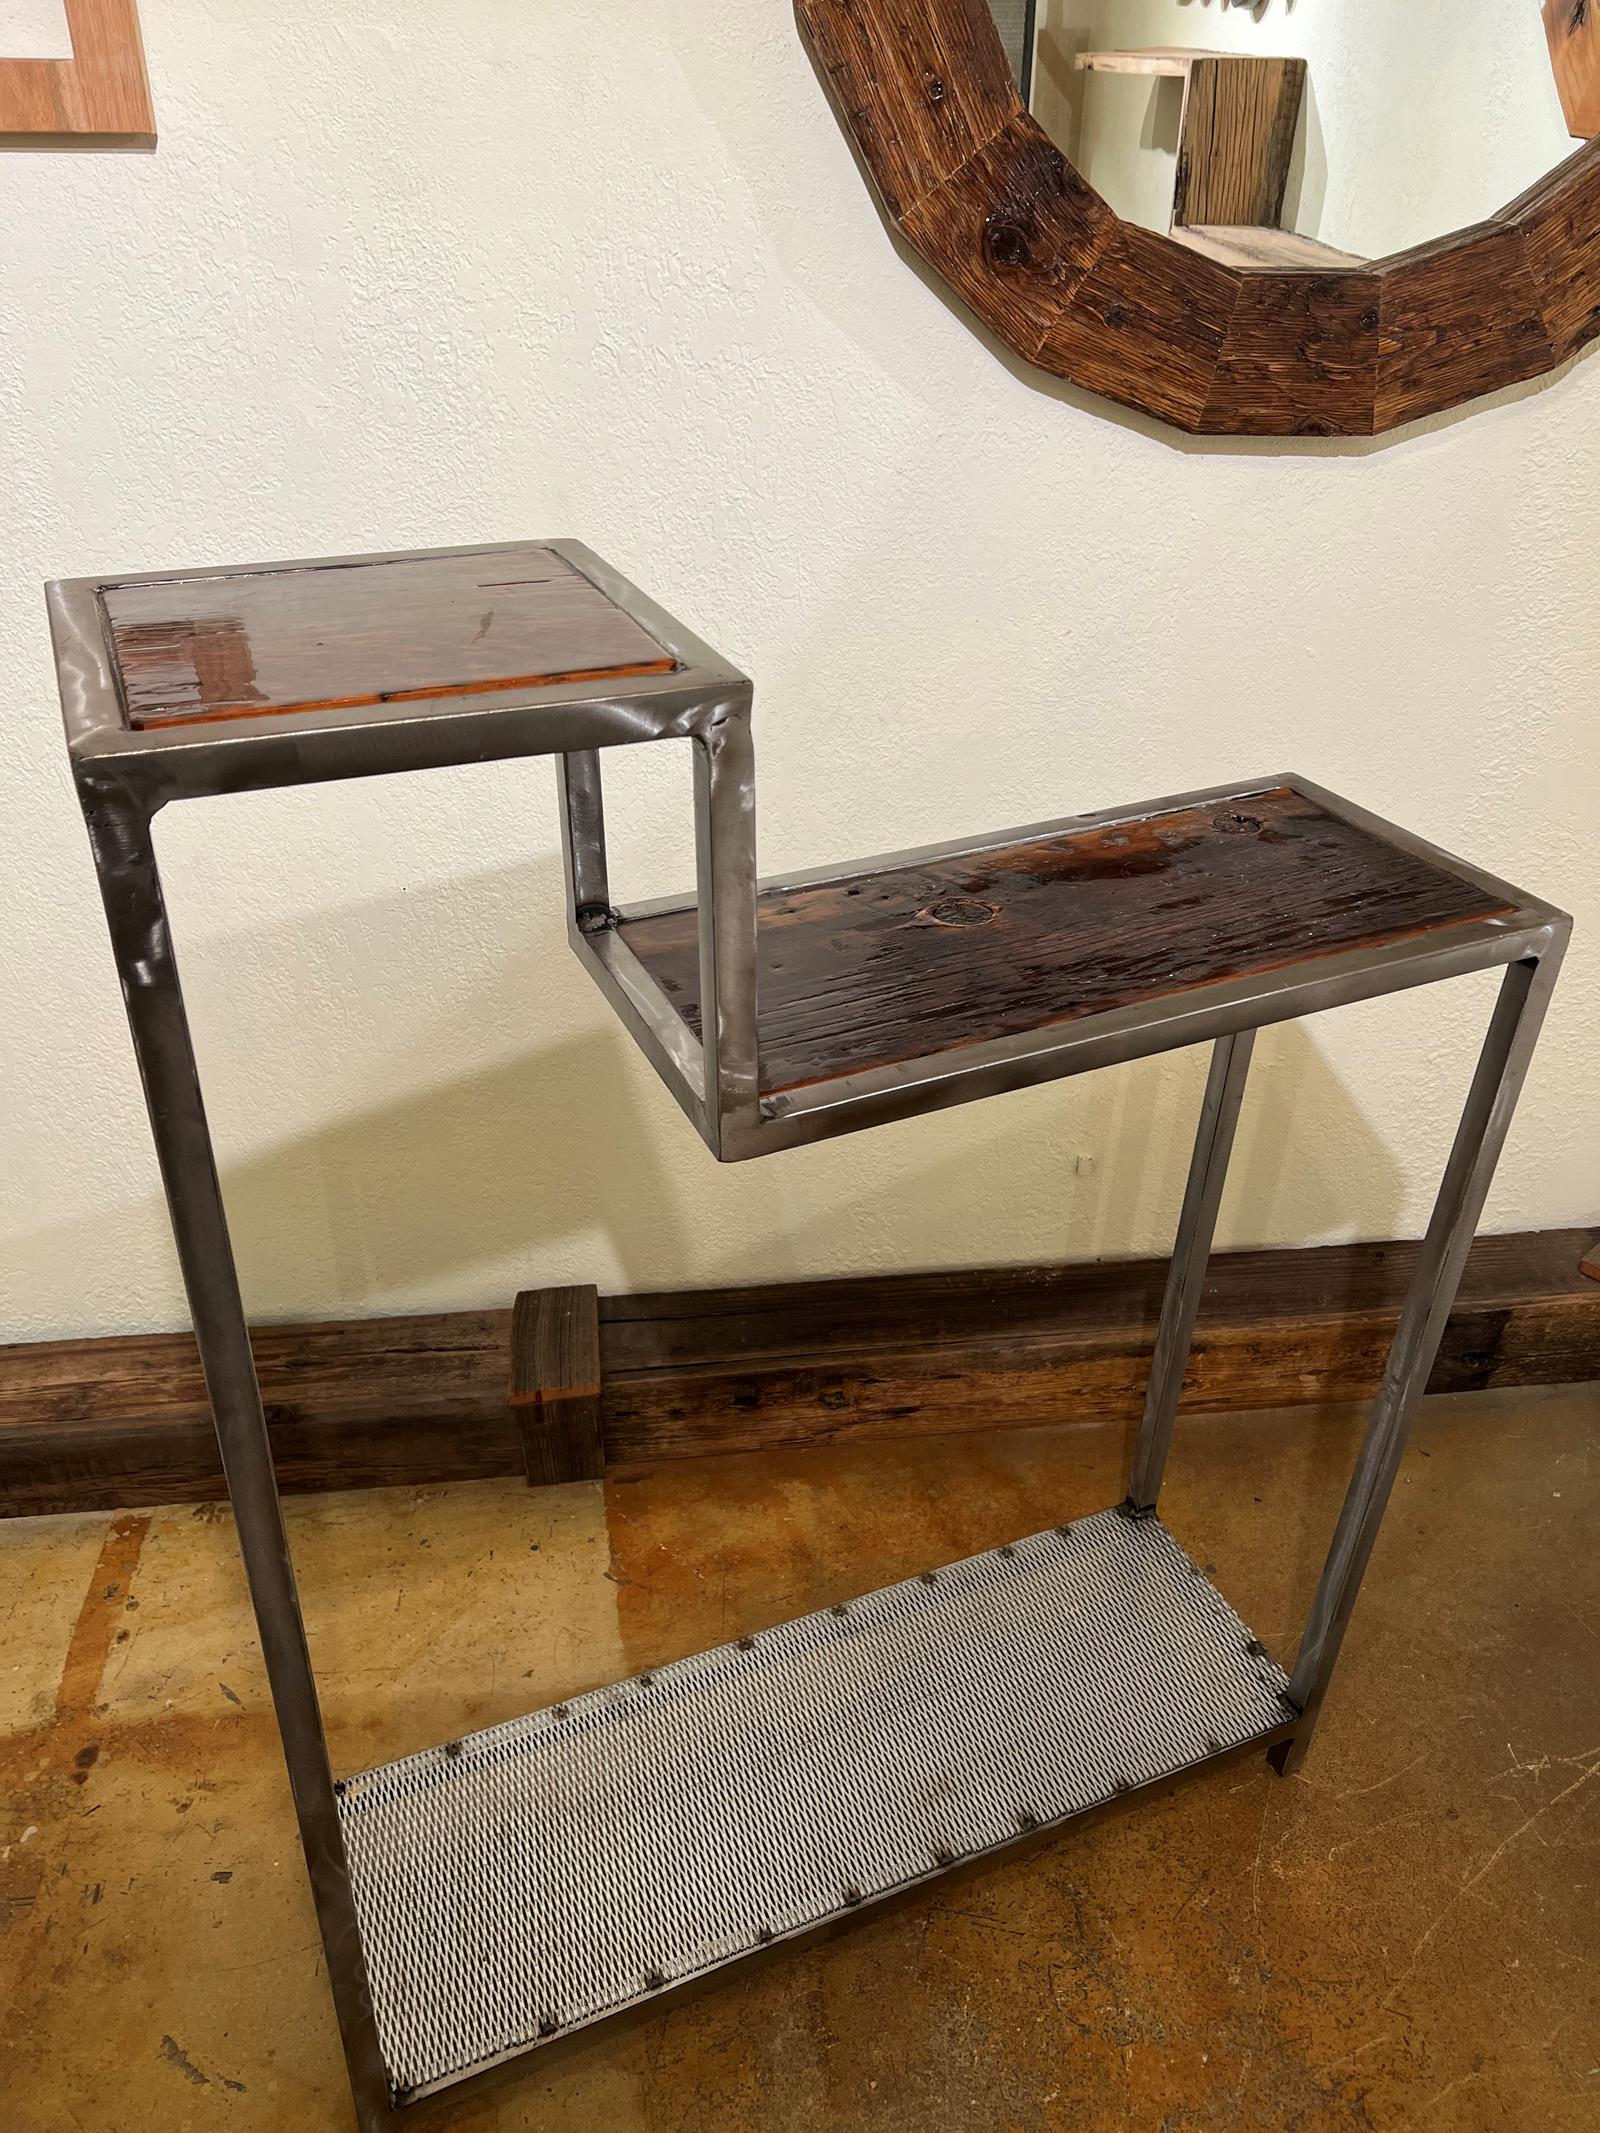 Rustic industrial, metal shelf, wooden top, w matching mini table 2